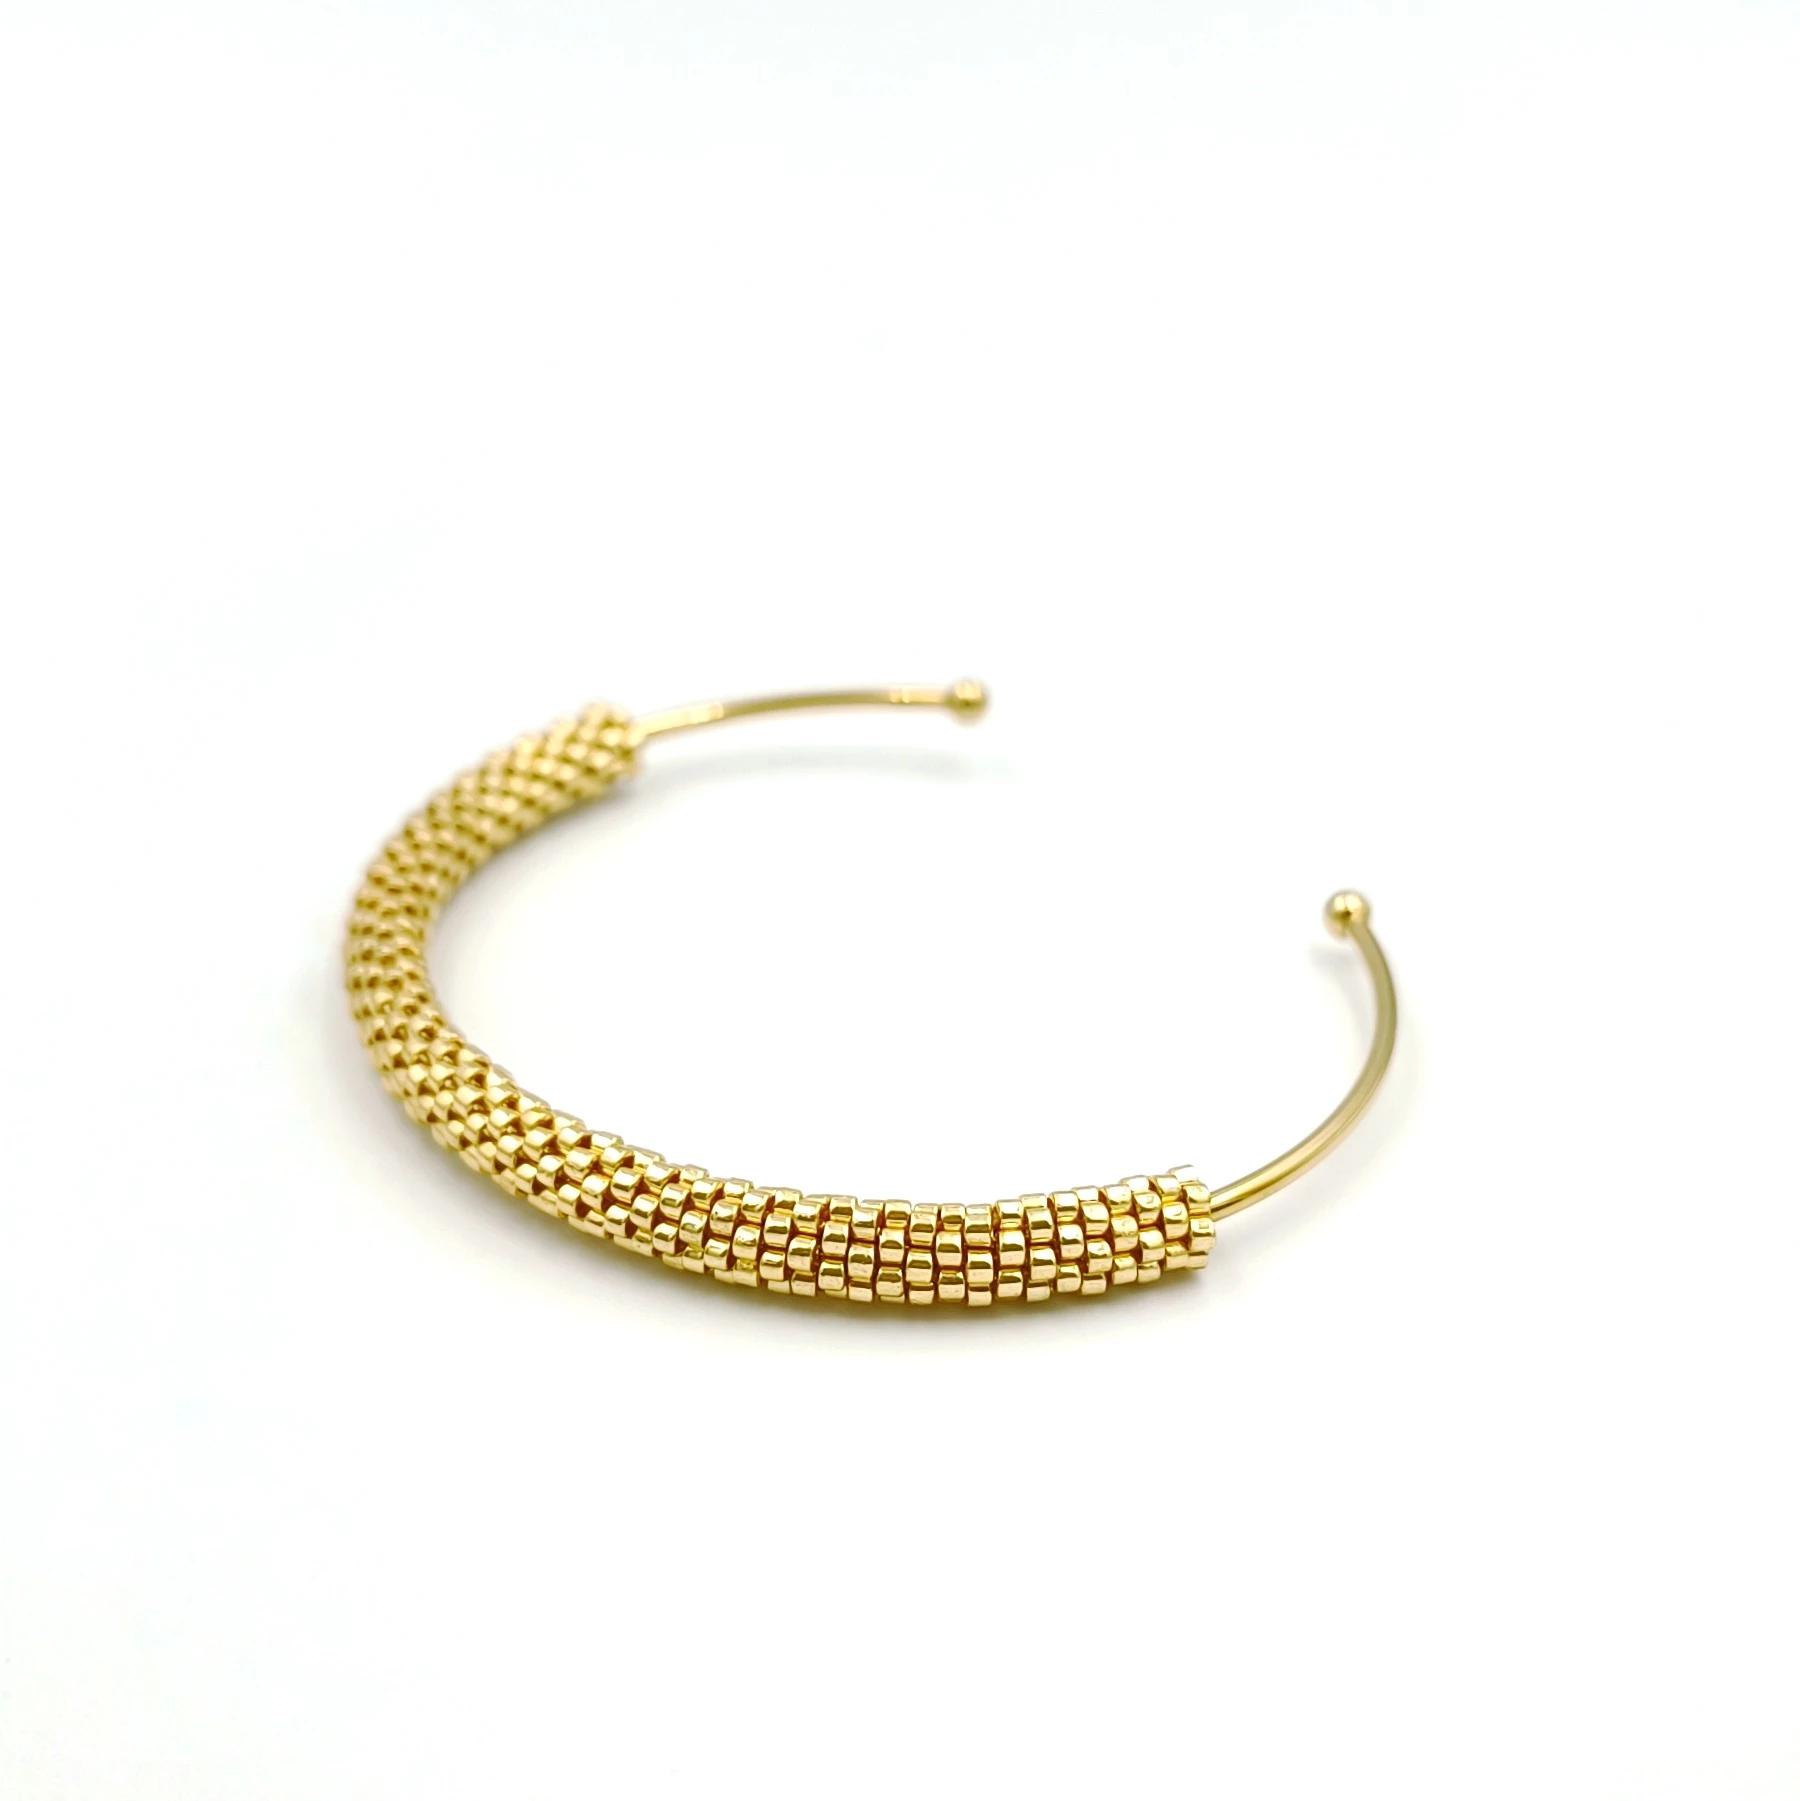 Gold Beaded Cuff Bracelet
